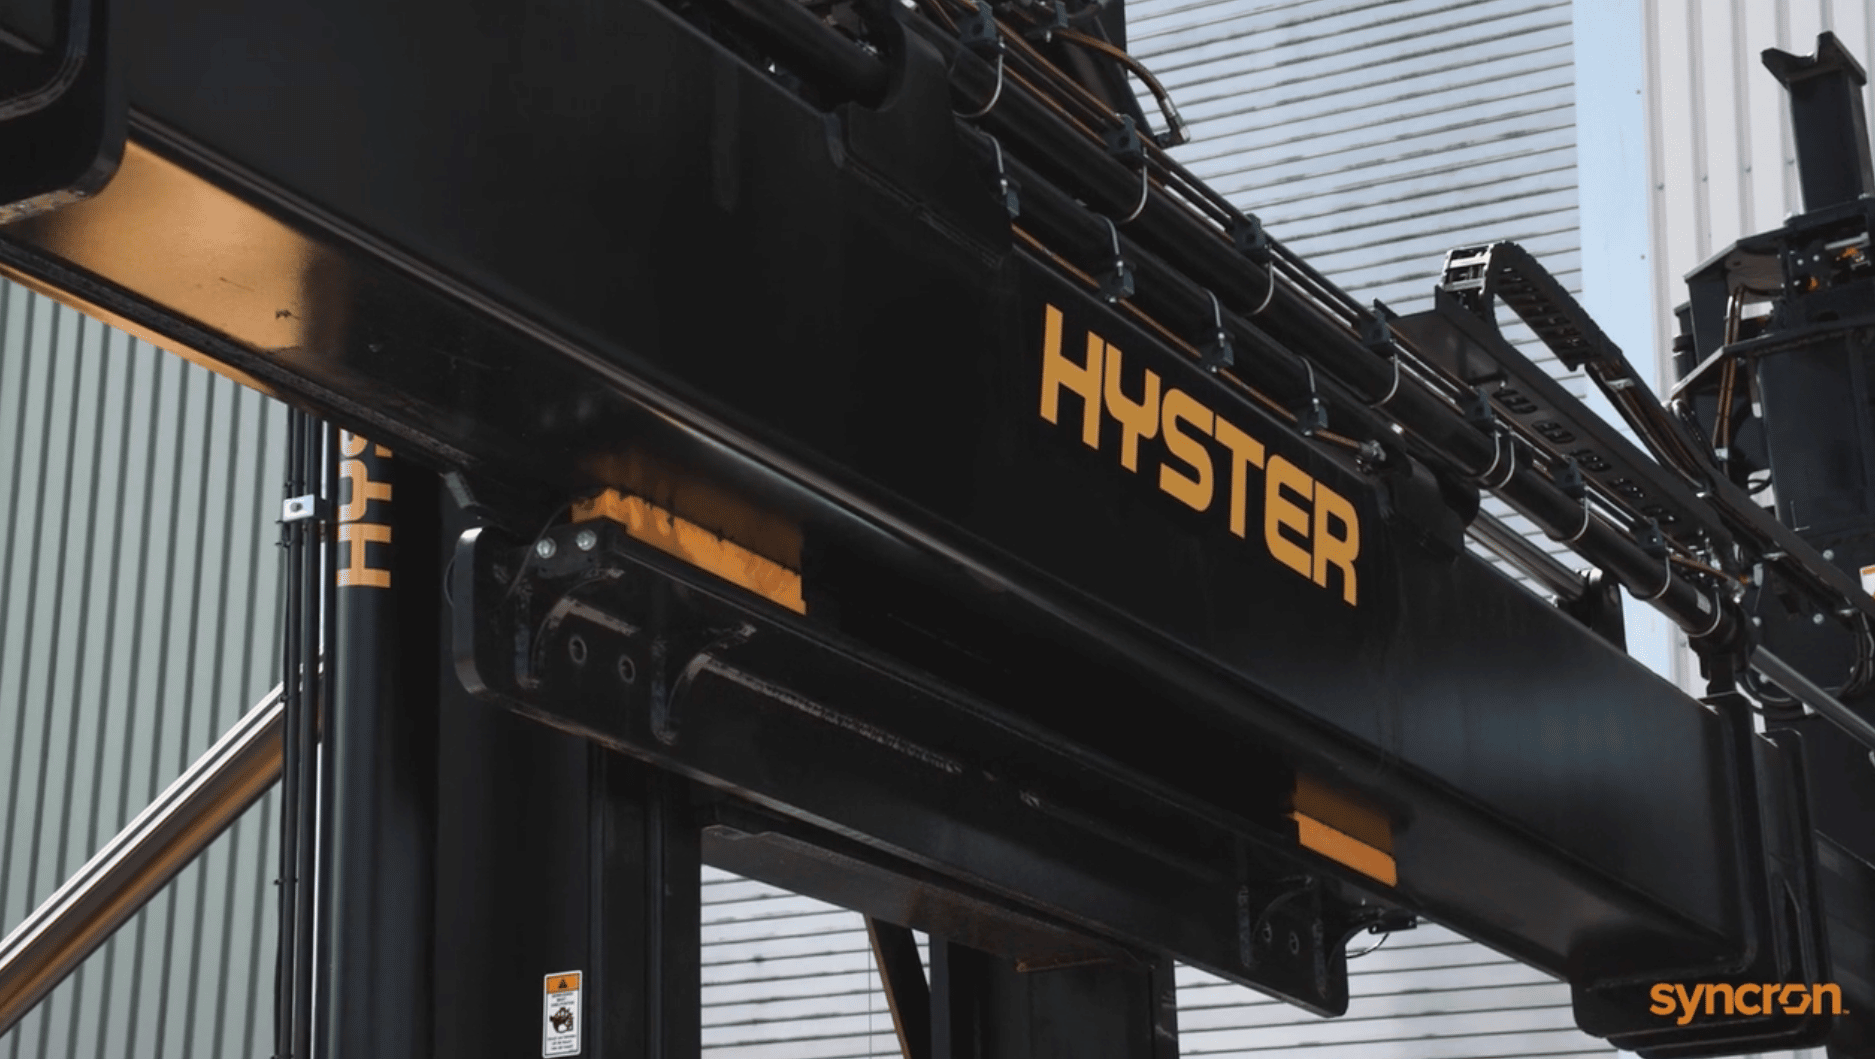 Hyster logo on equipment